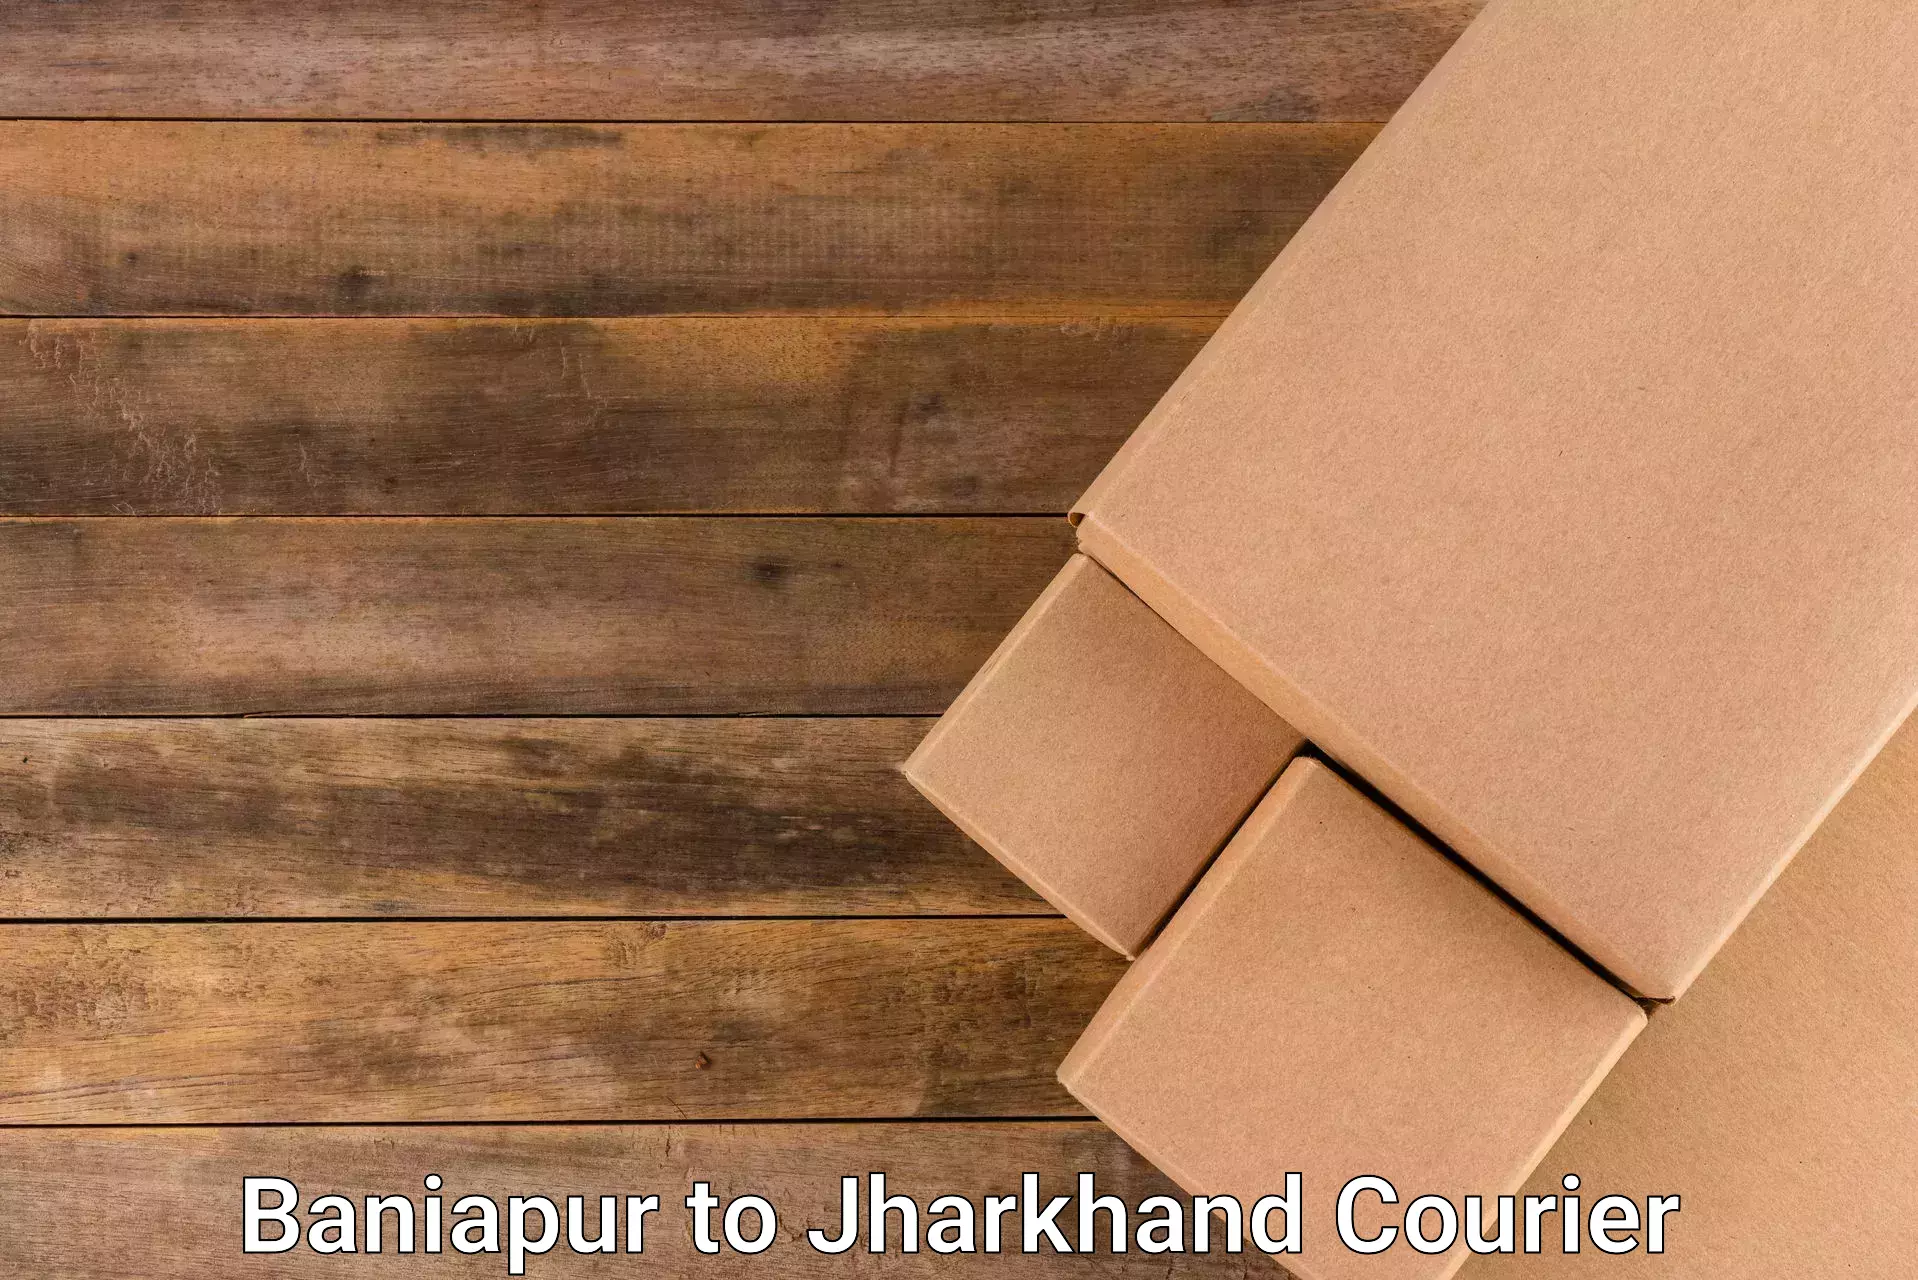 Reliable package handling in Baniapur to Bokaro